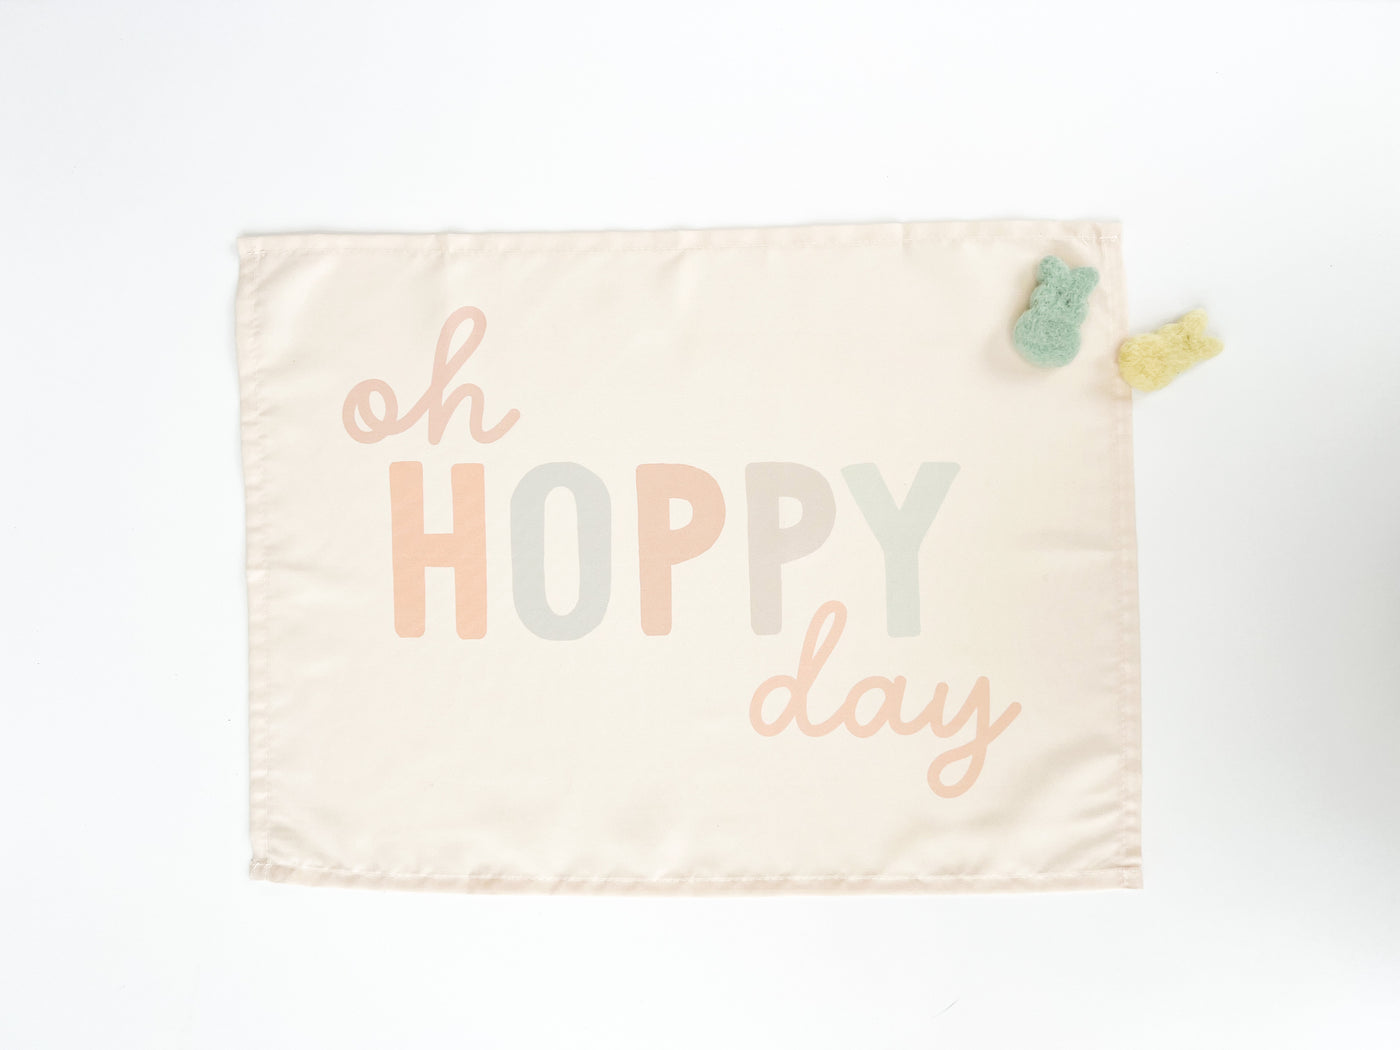 Neutral Oh Hoppy Day Banner